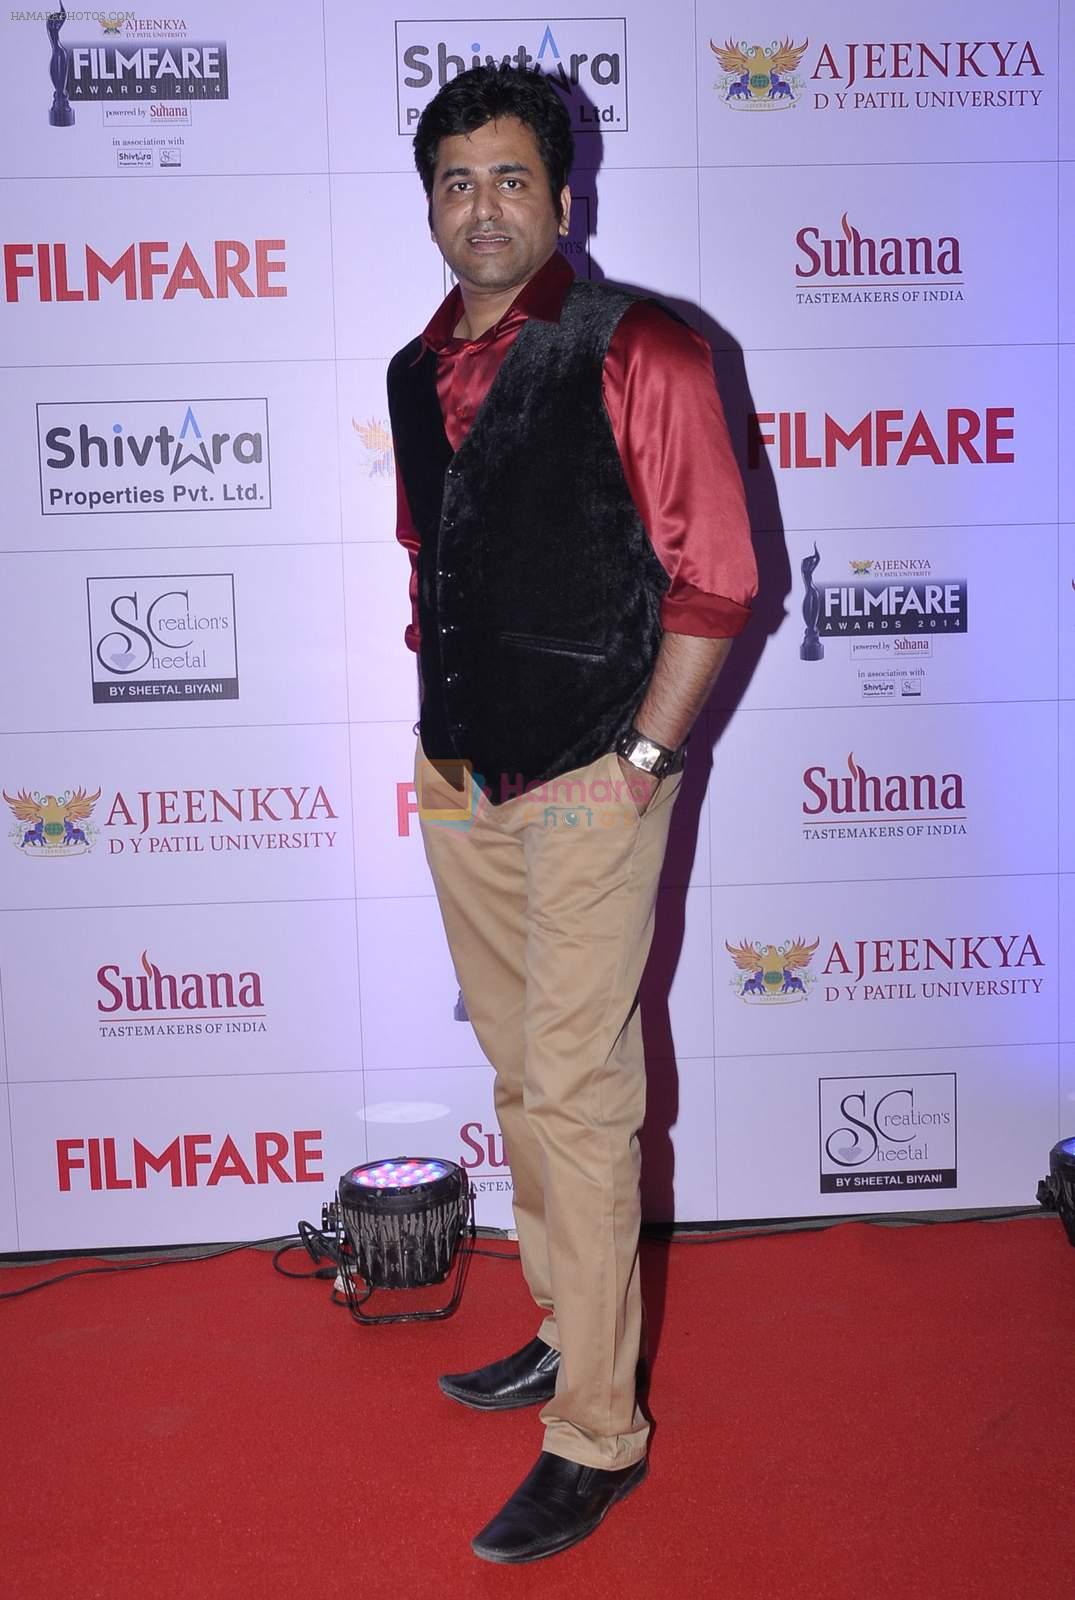 Ajay Naik (Music Director) at the Red Carpet of _Ajeenkya DY Patil University Filmfare Awards